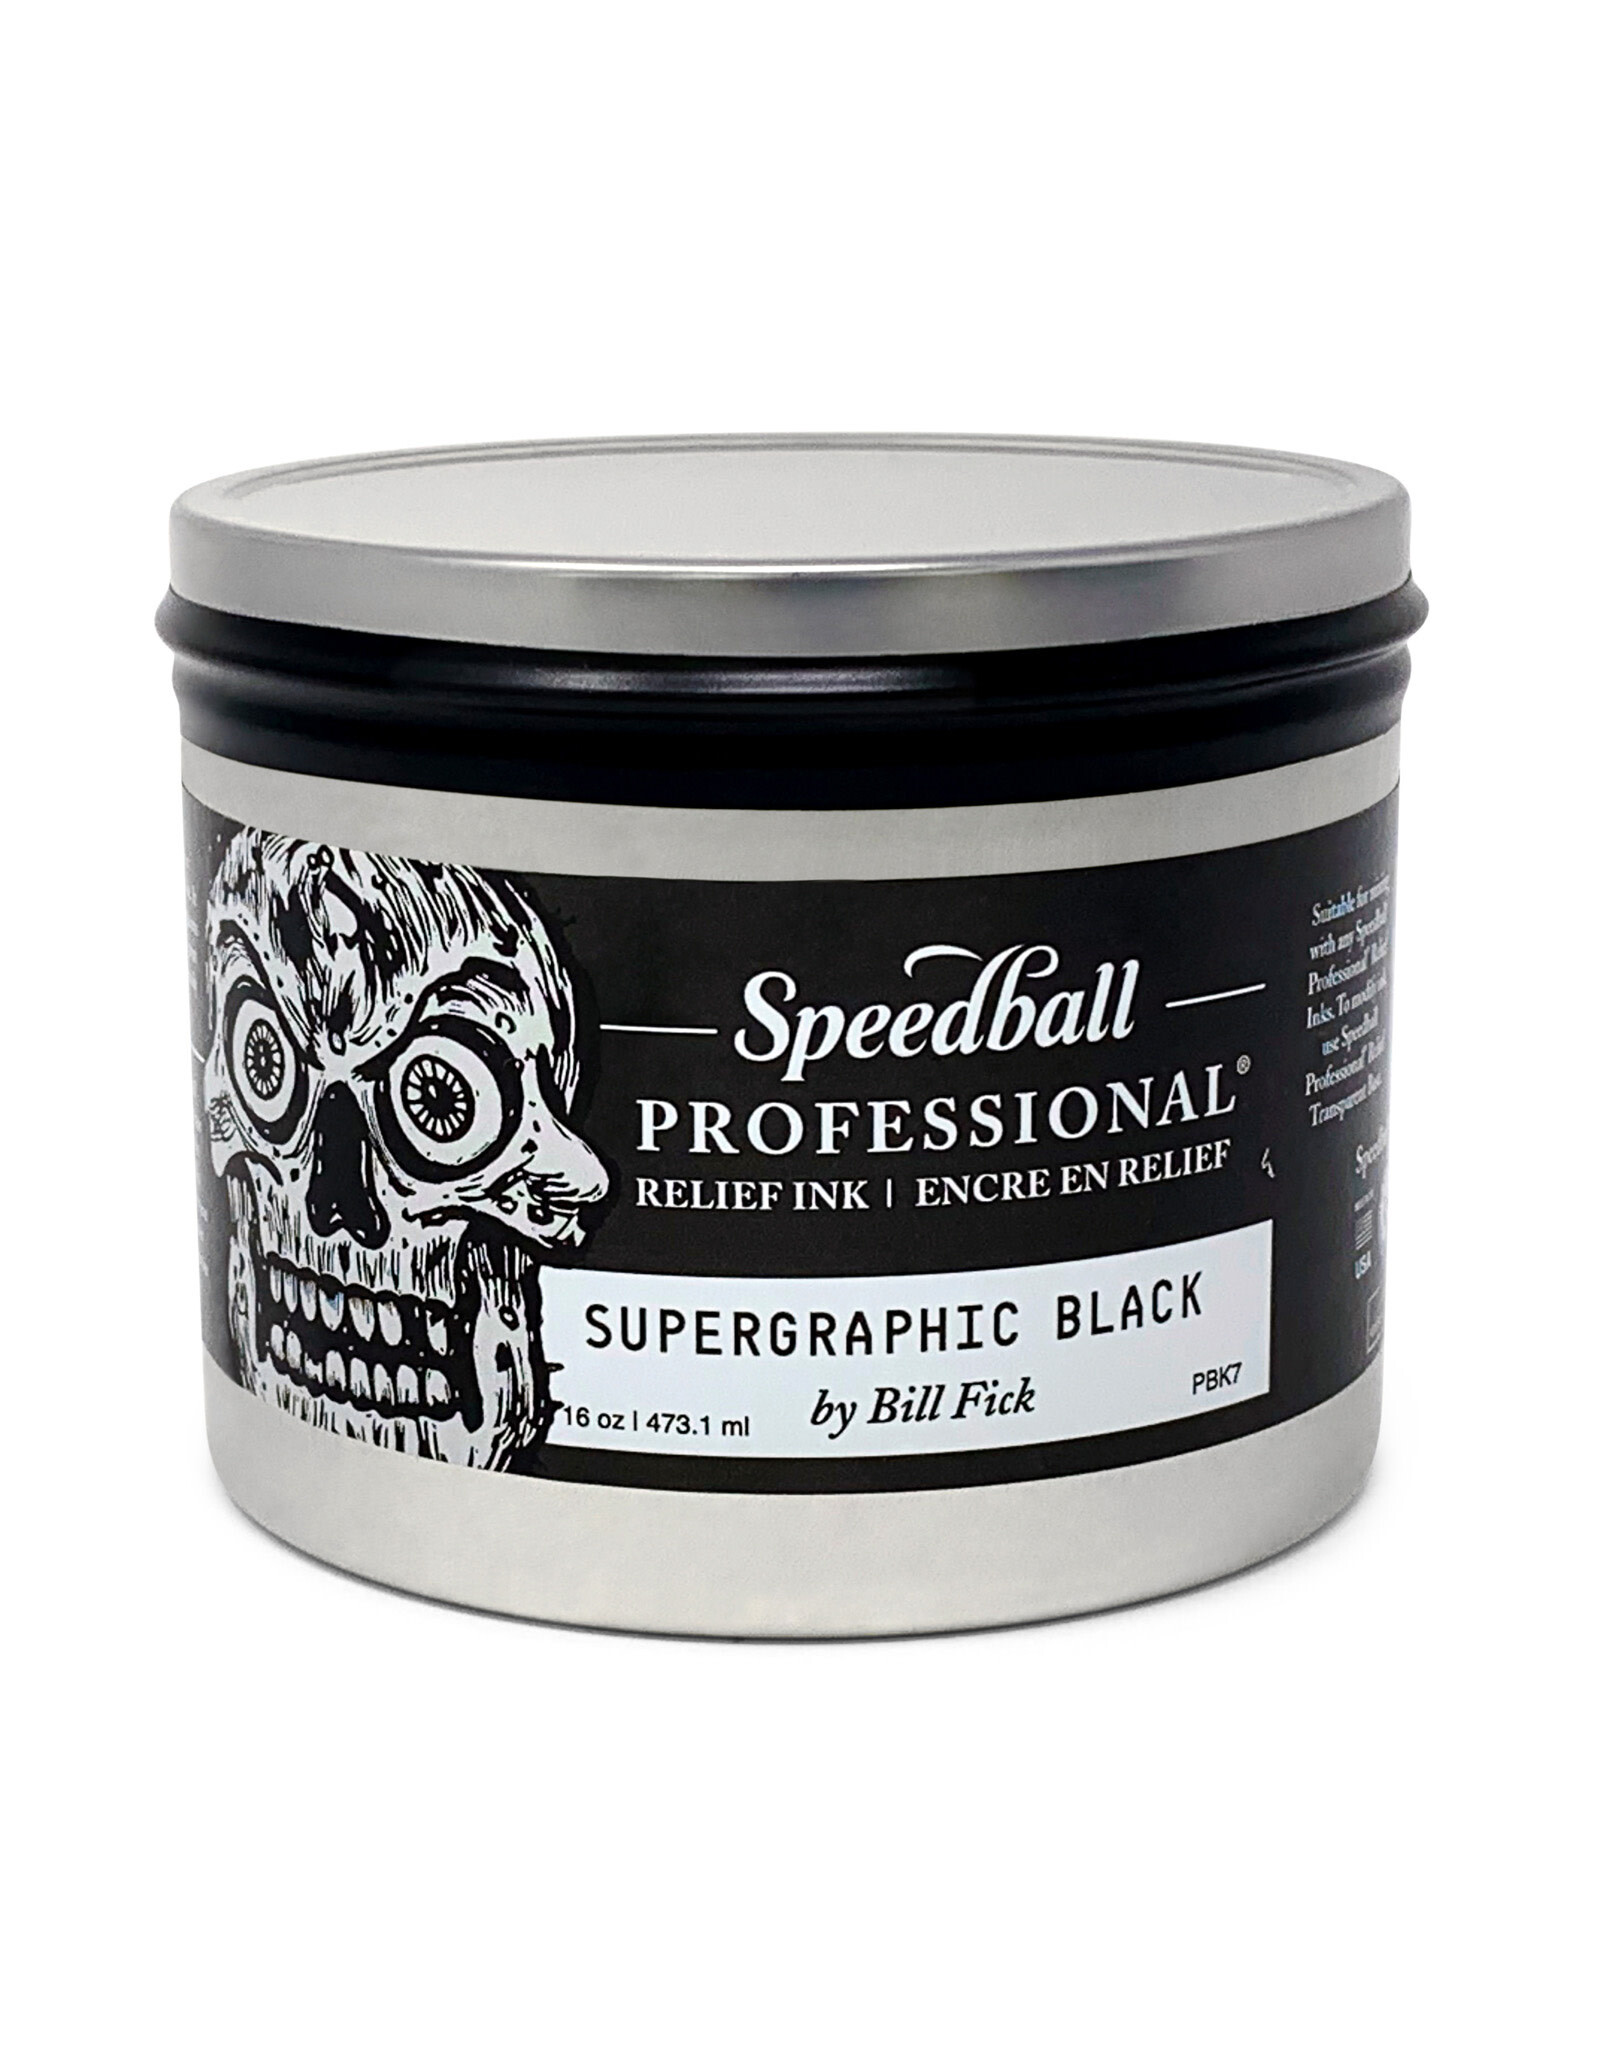 SPEEDBALL ART PRODUCTS Speedball Professional Relief Ink, Supergraphic Black, 16oz